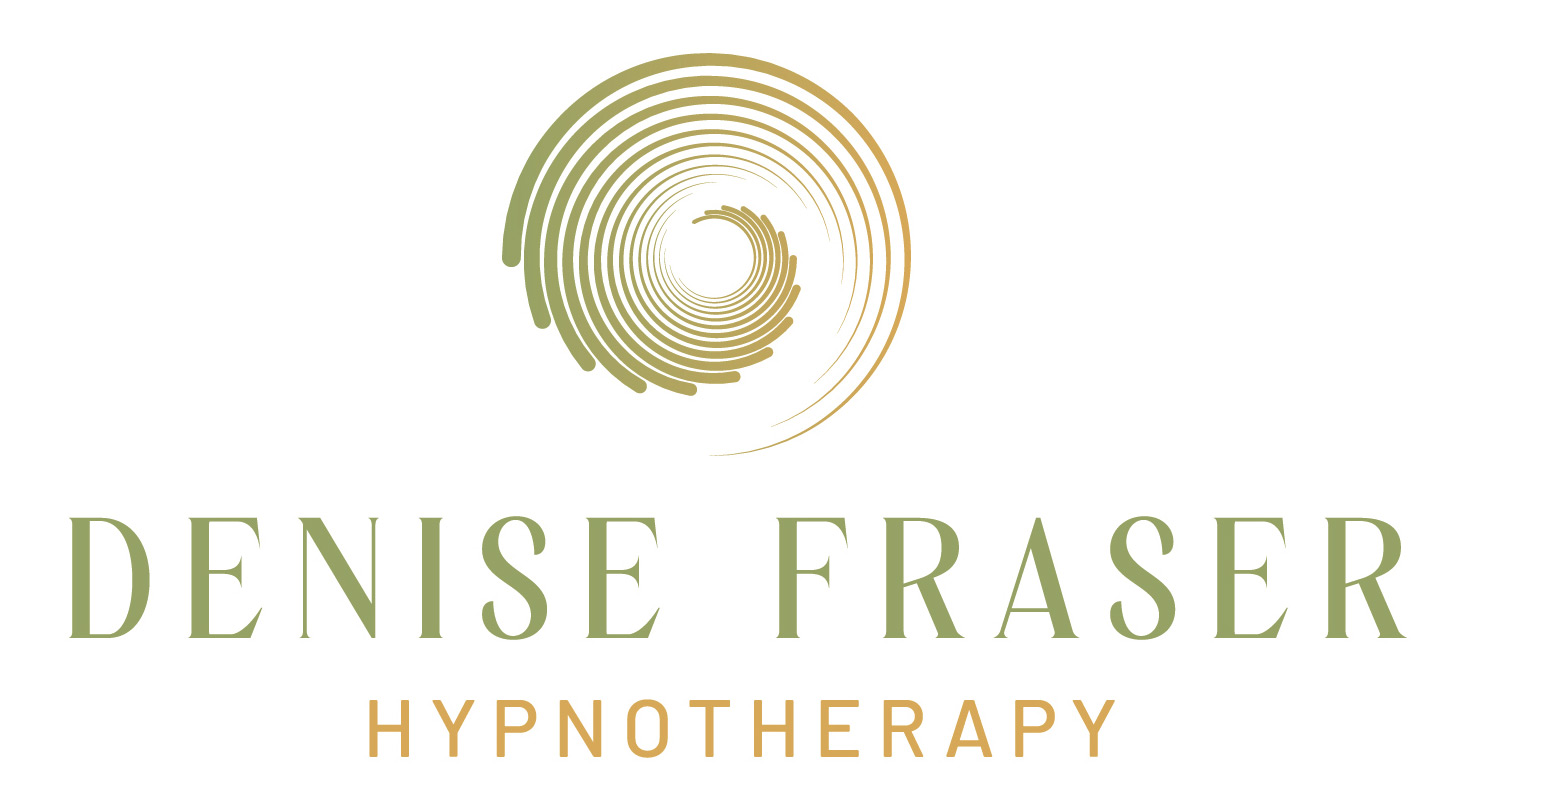 Denise Fraser Hypnotherapy